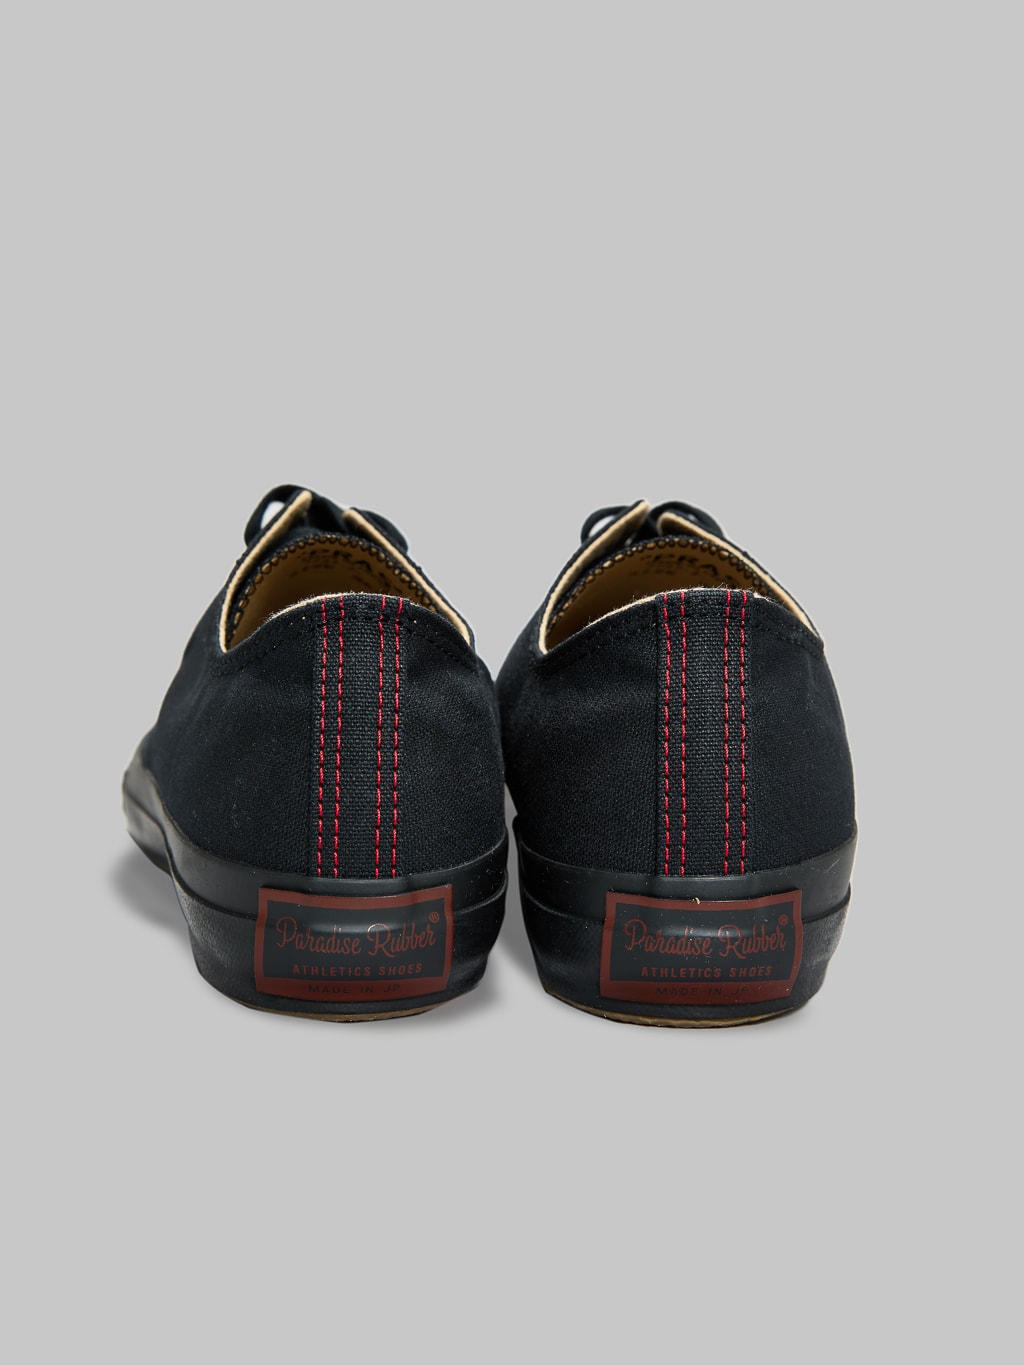 Pras shellcap low sneakers kuro black reinforced heel